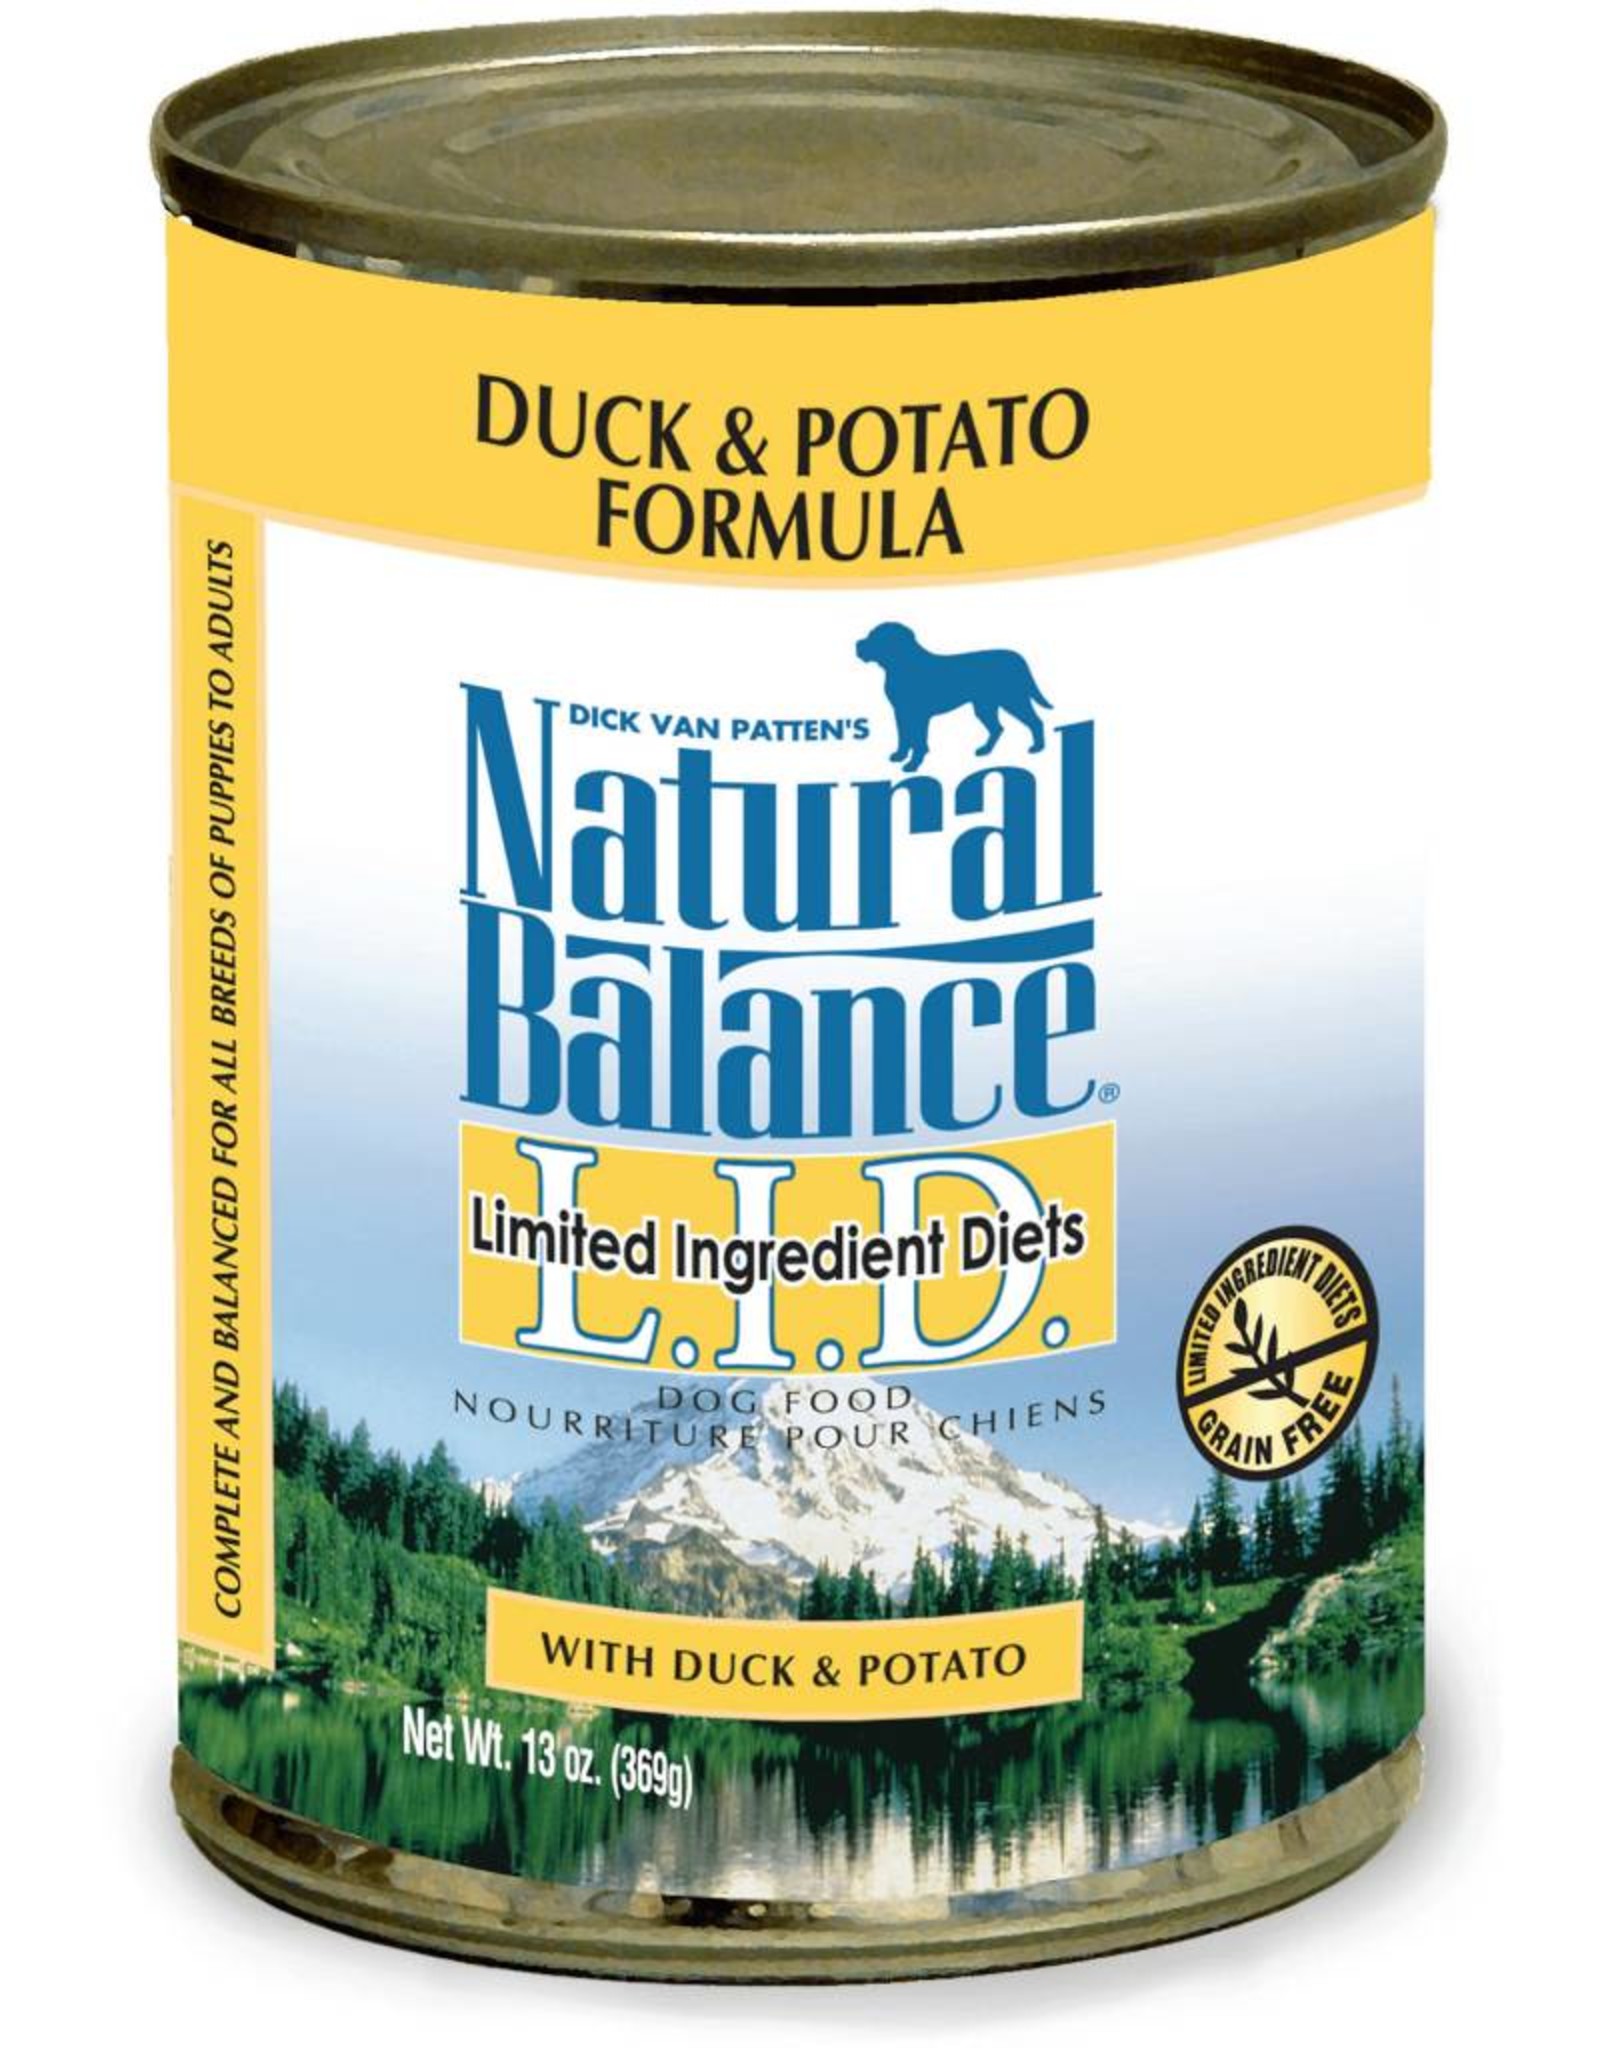 Natural Balance Natural Balance Limited Ingredient Diets Duck & Potato Formula Canned Dog Food 13 oz.